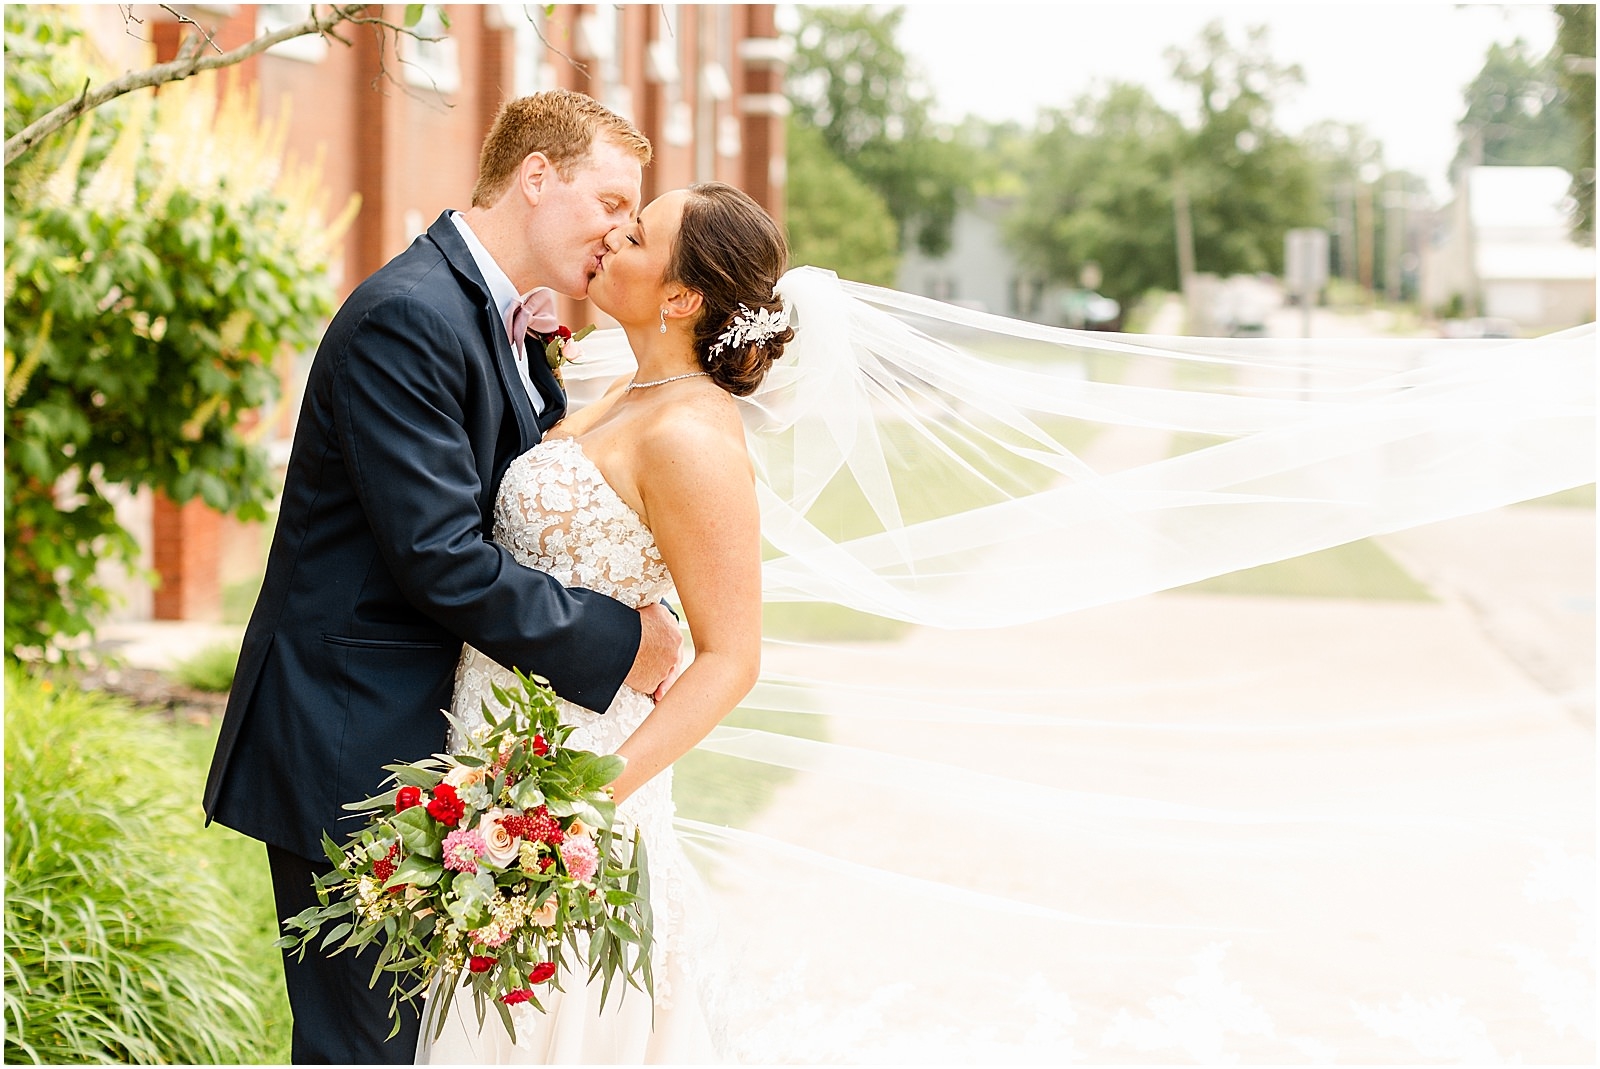 Deidra and Andrew | A Huntingburgh Indiana Wedding Bret and Brandie | Evansville Photographers | @bretandbrandie-0060.jpg